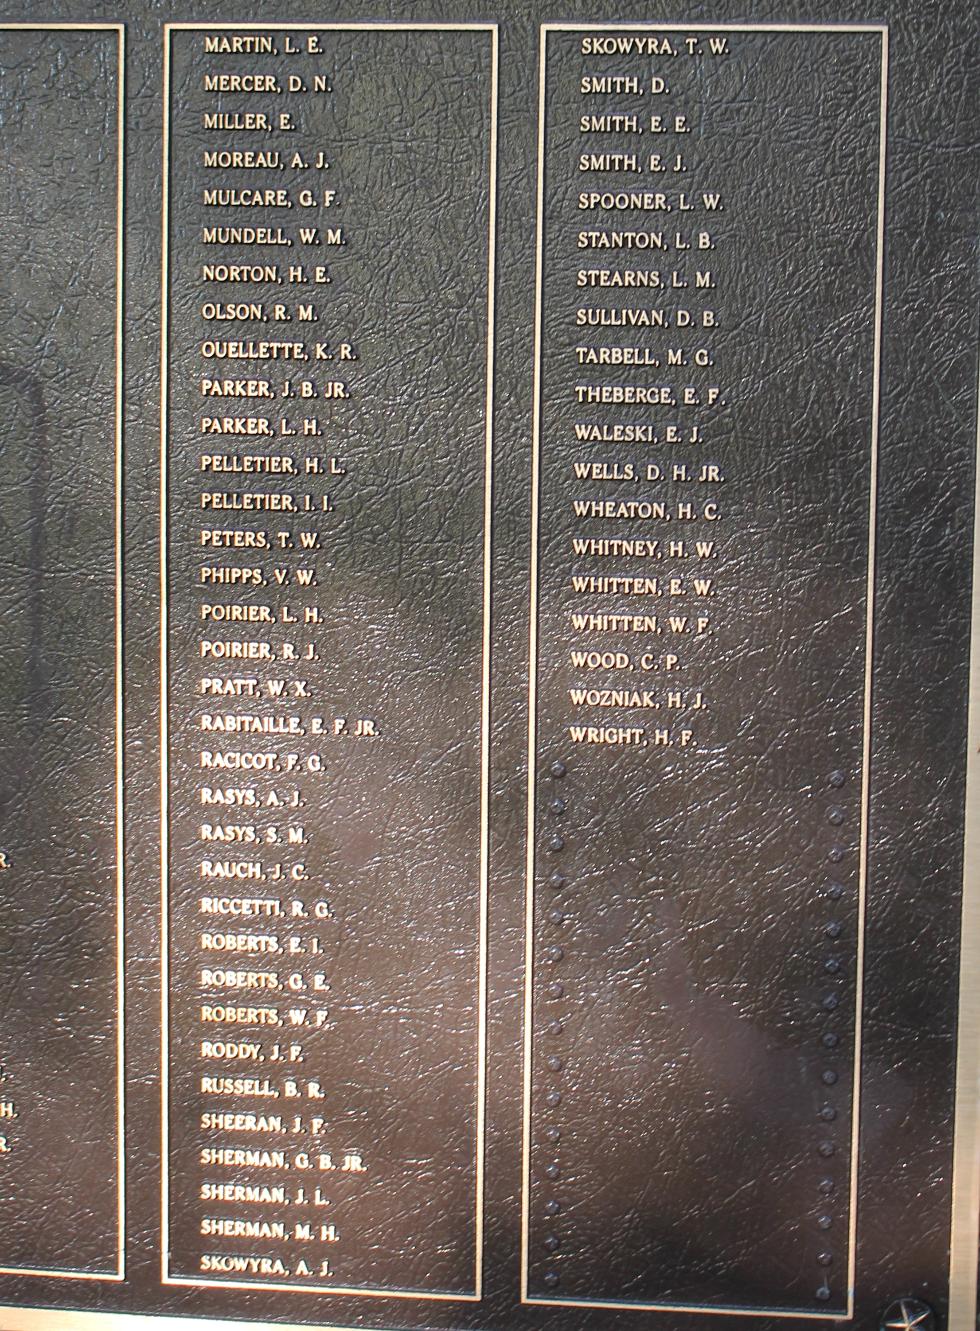 Brimfield Massachusetts World War II Veterans Memorial